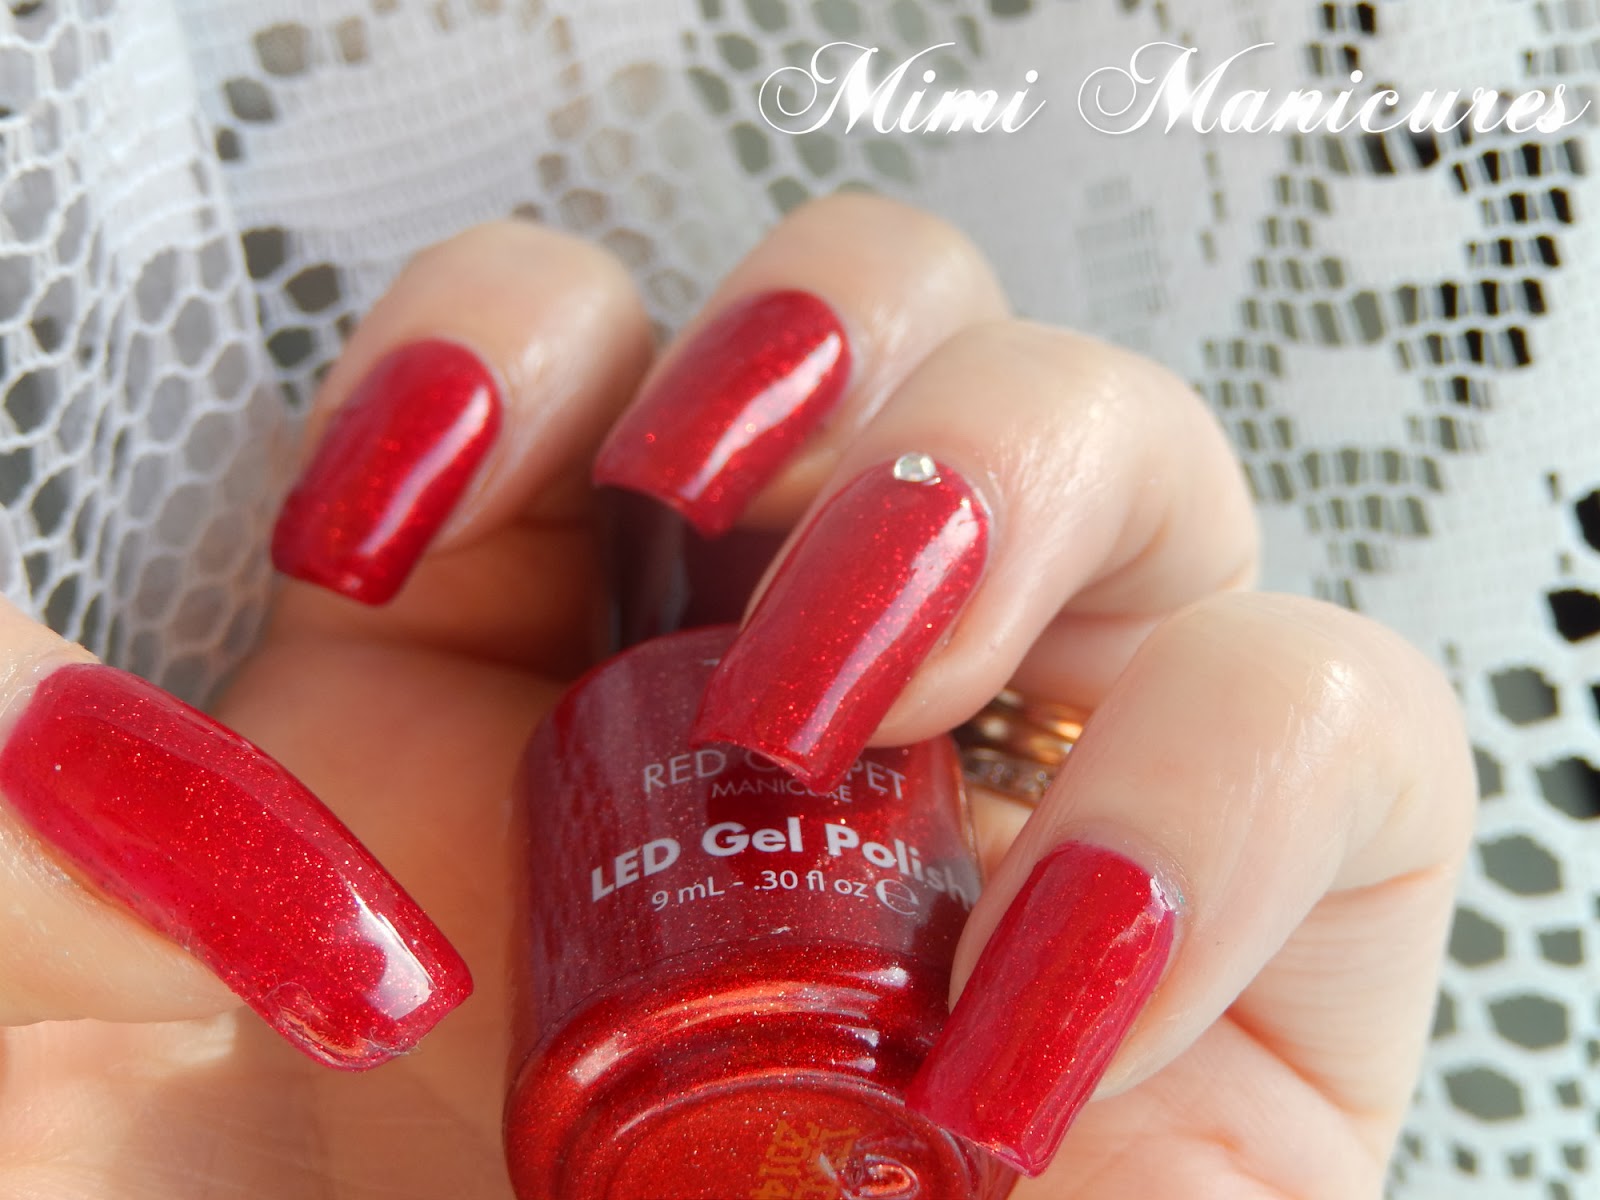 10. Red Carpet Manicure Gel Polish - wide 3